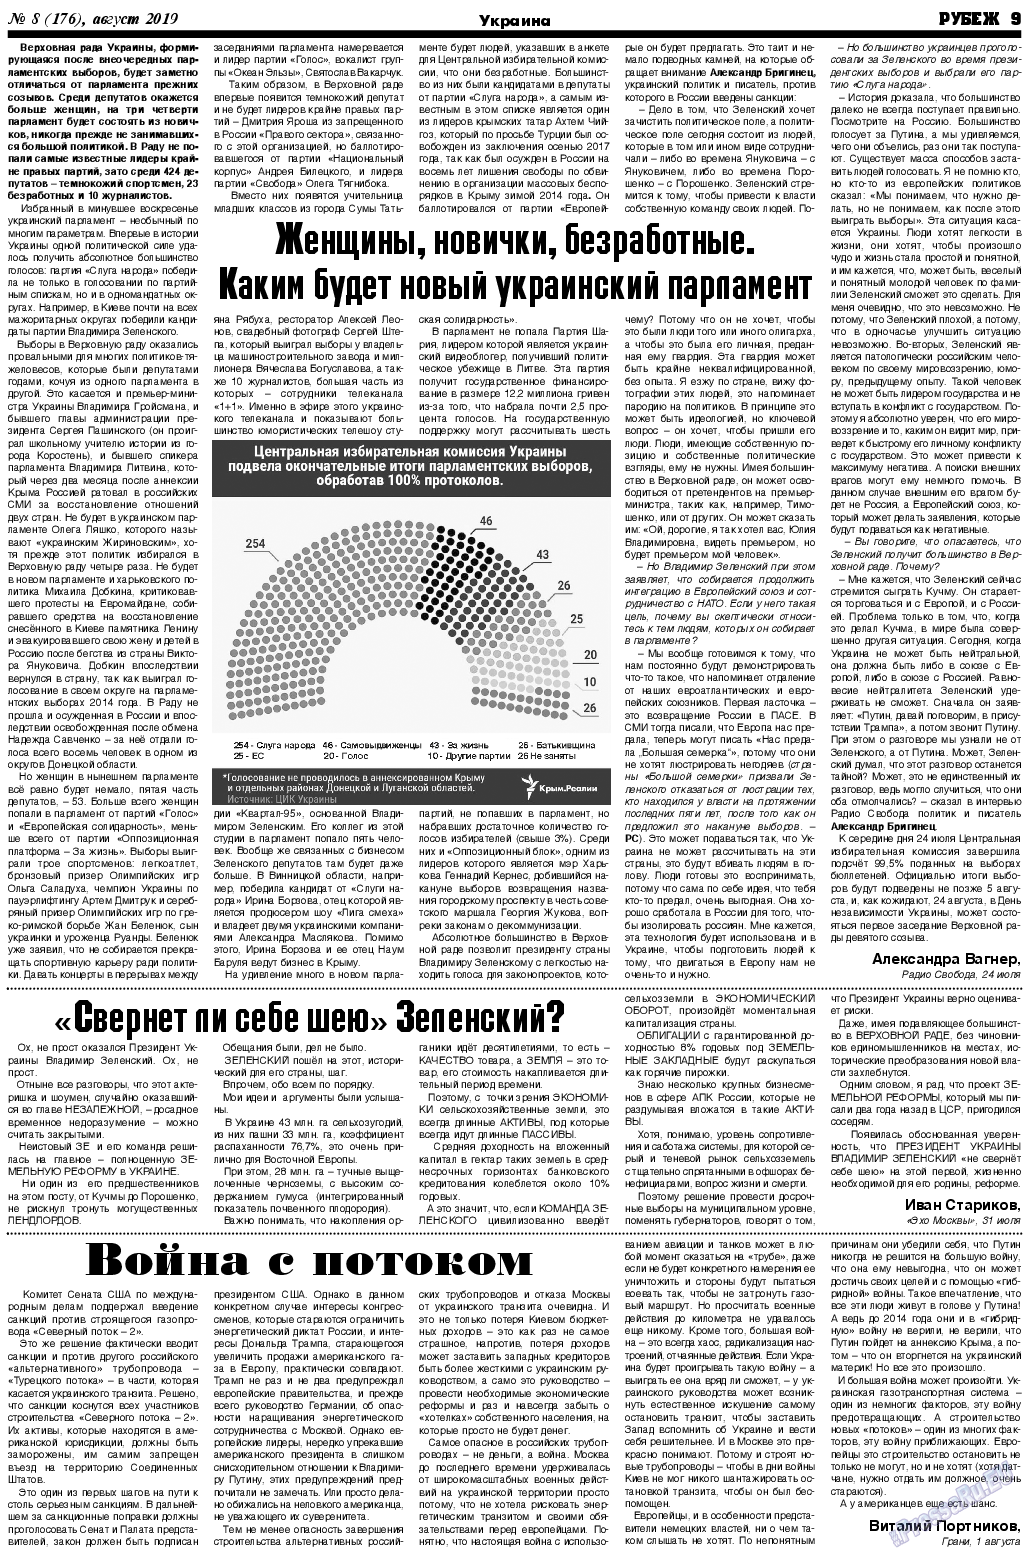 Рубеж, газета. 2019 №8 стр.9